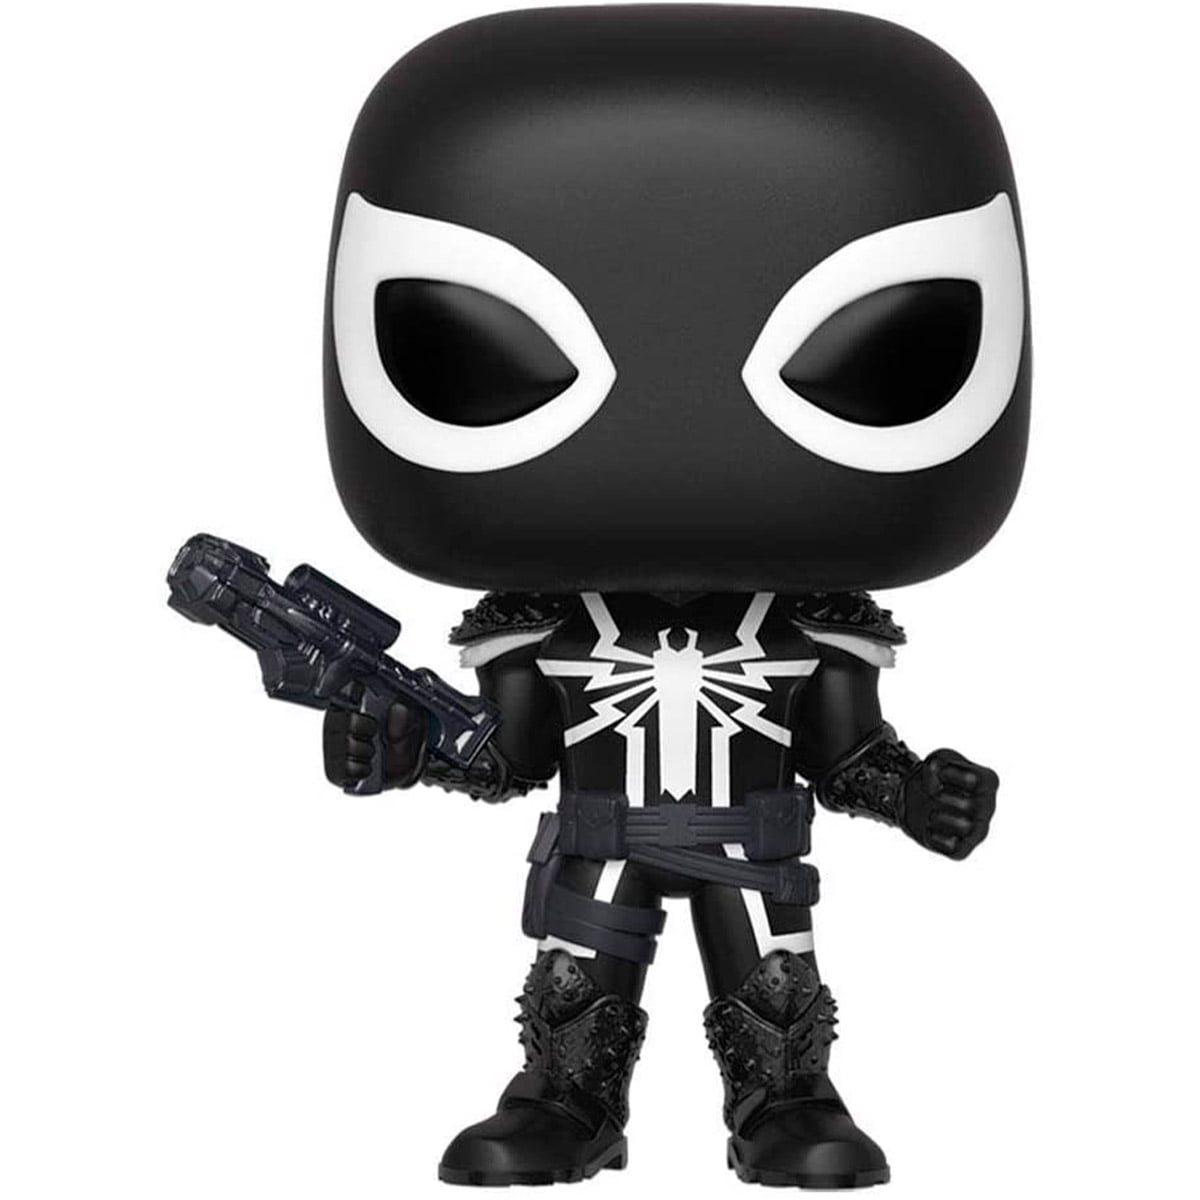 Funko Pop Marvel Agent Venom 507